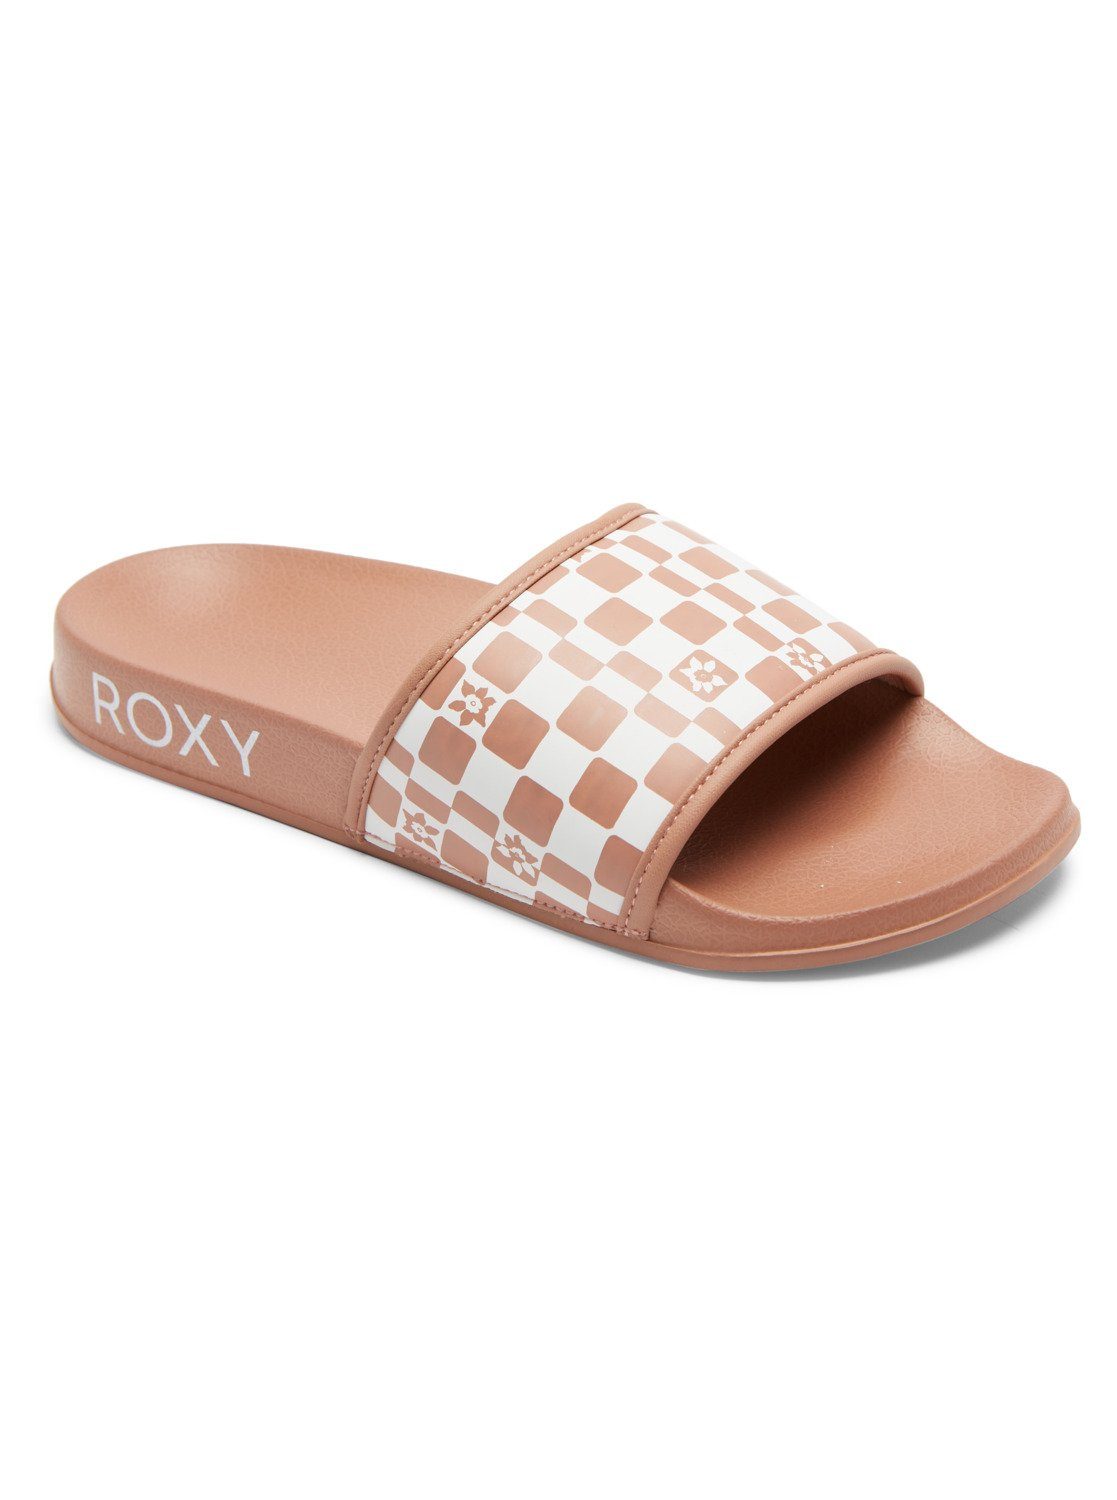 Roxy Slippy Sandale White/Tan